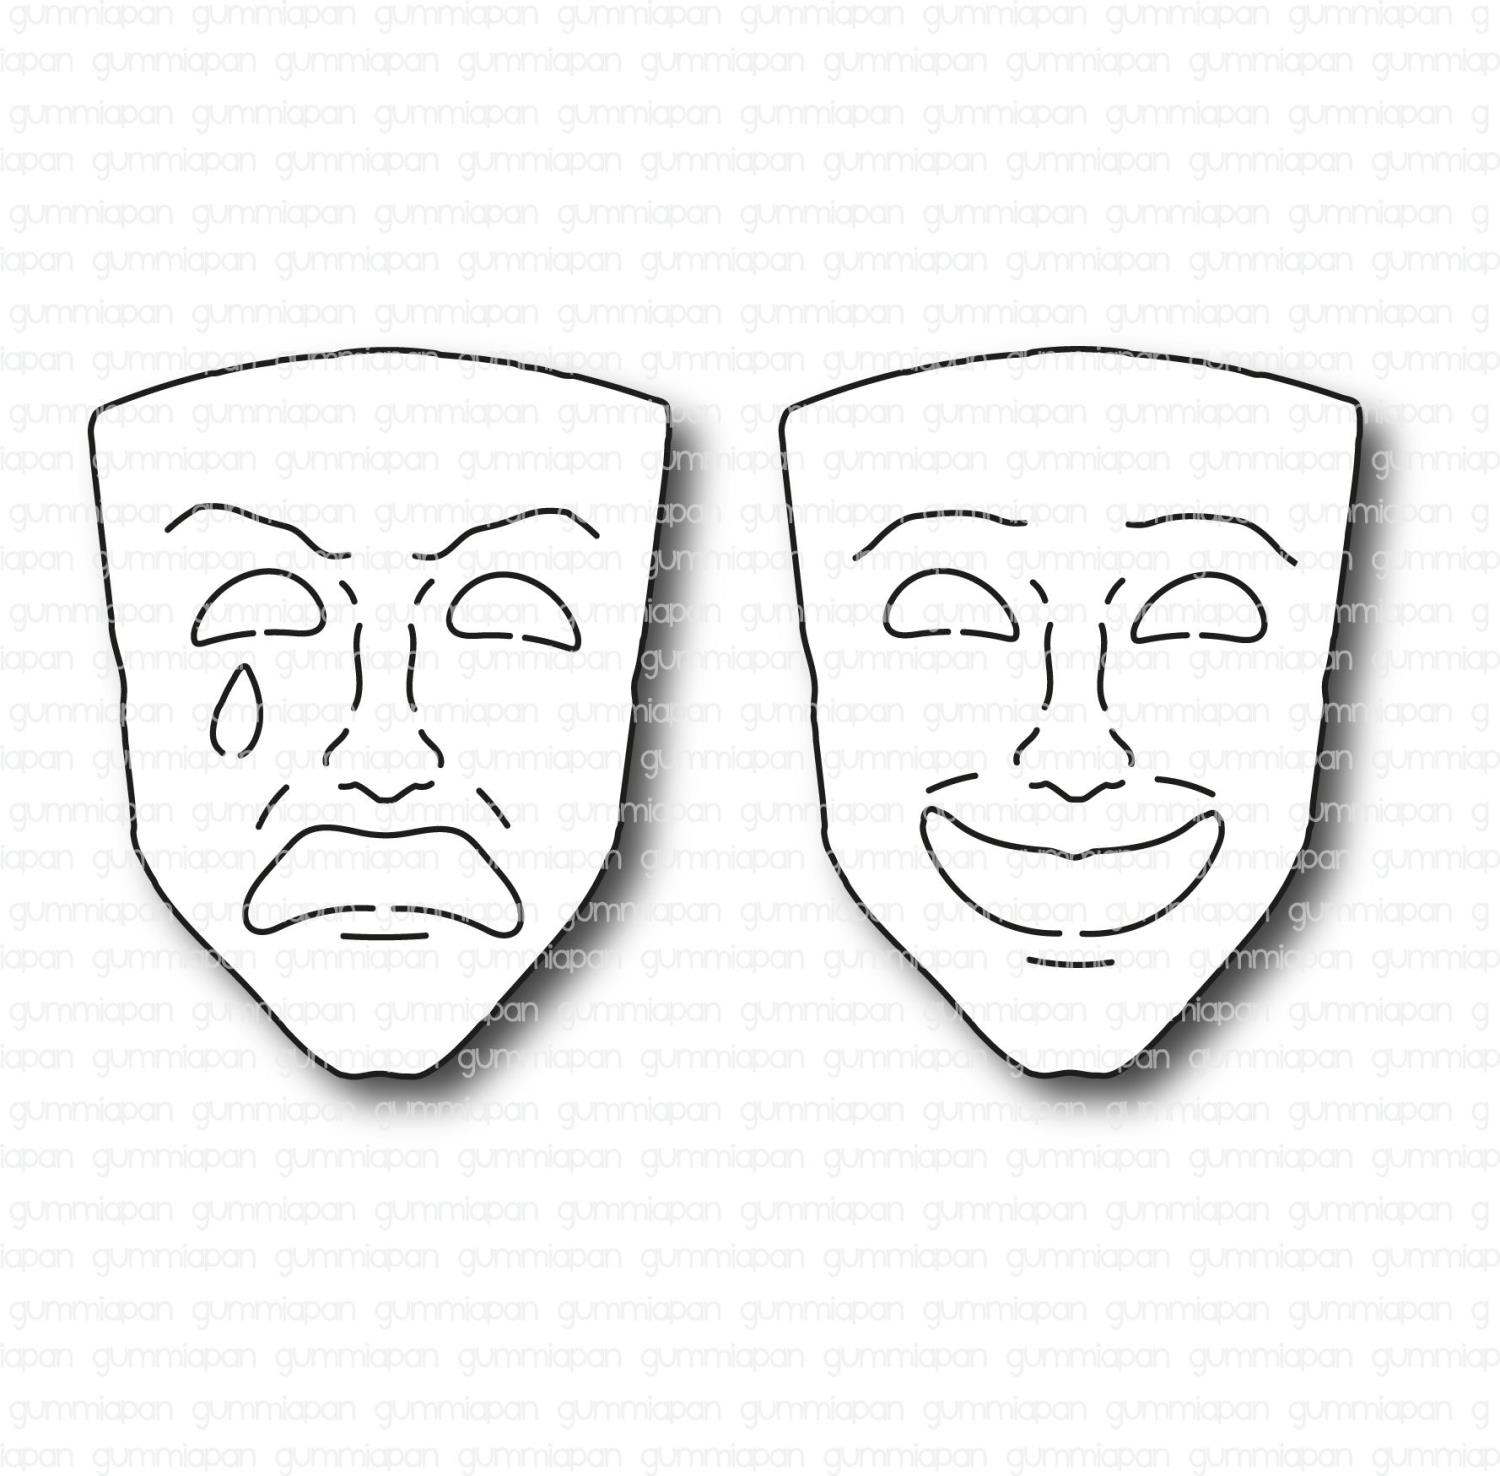 Gummiapan - Teater masker -dies